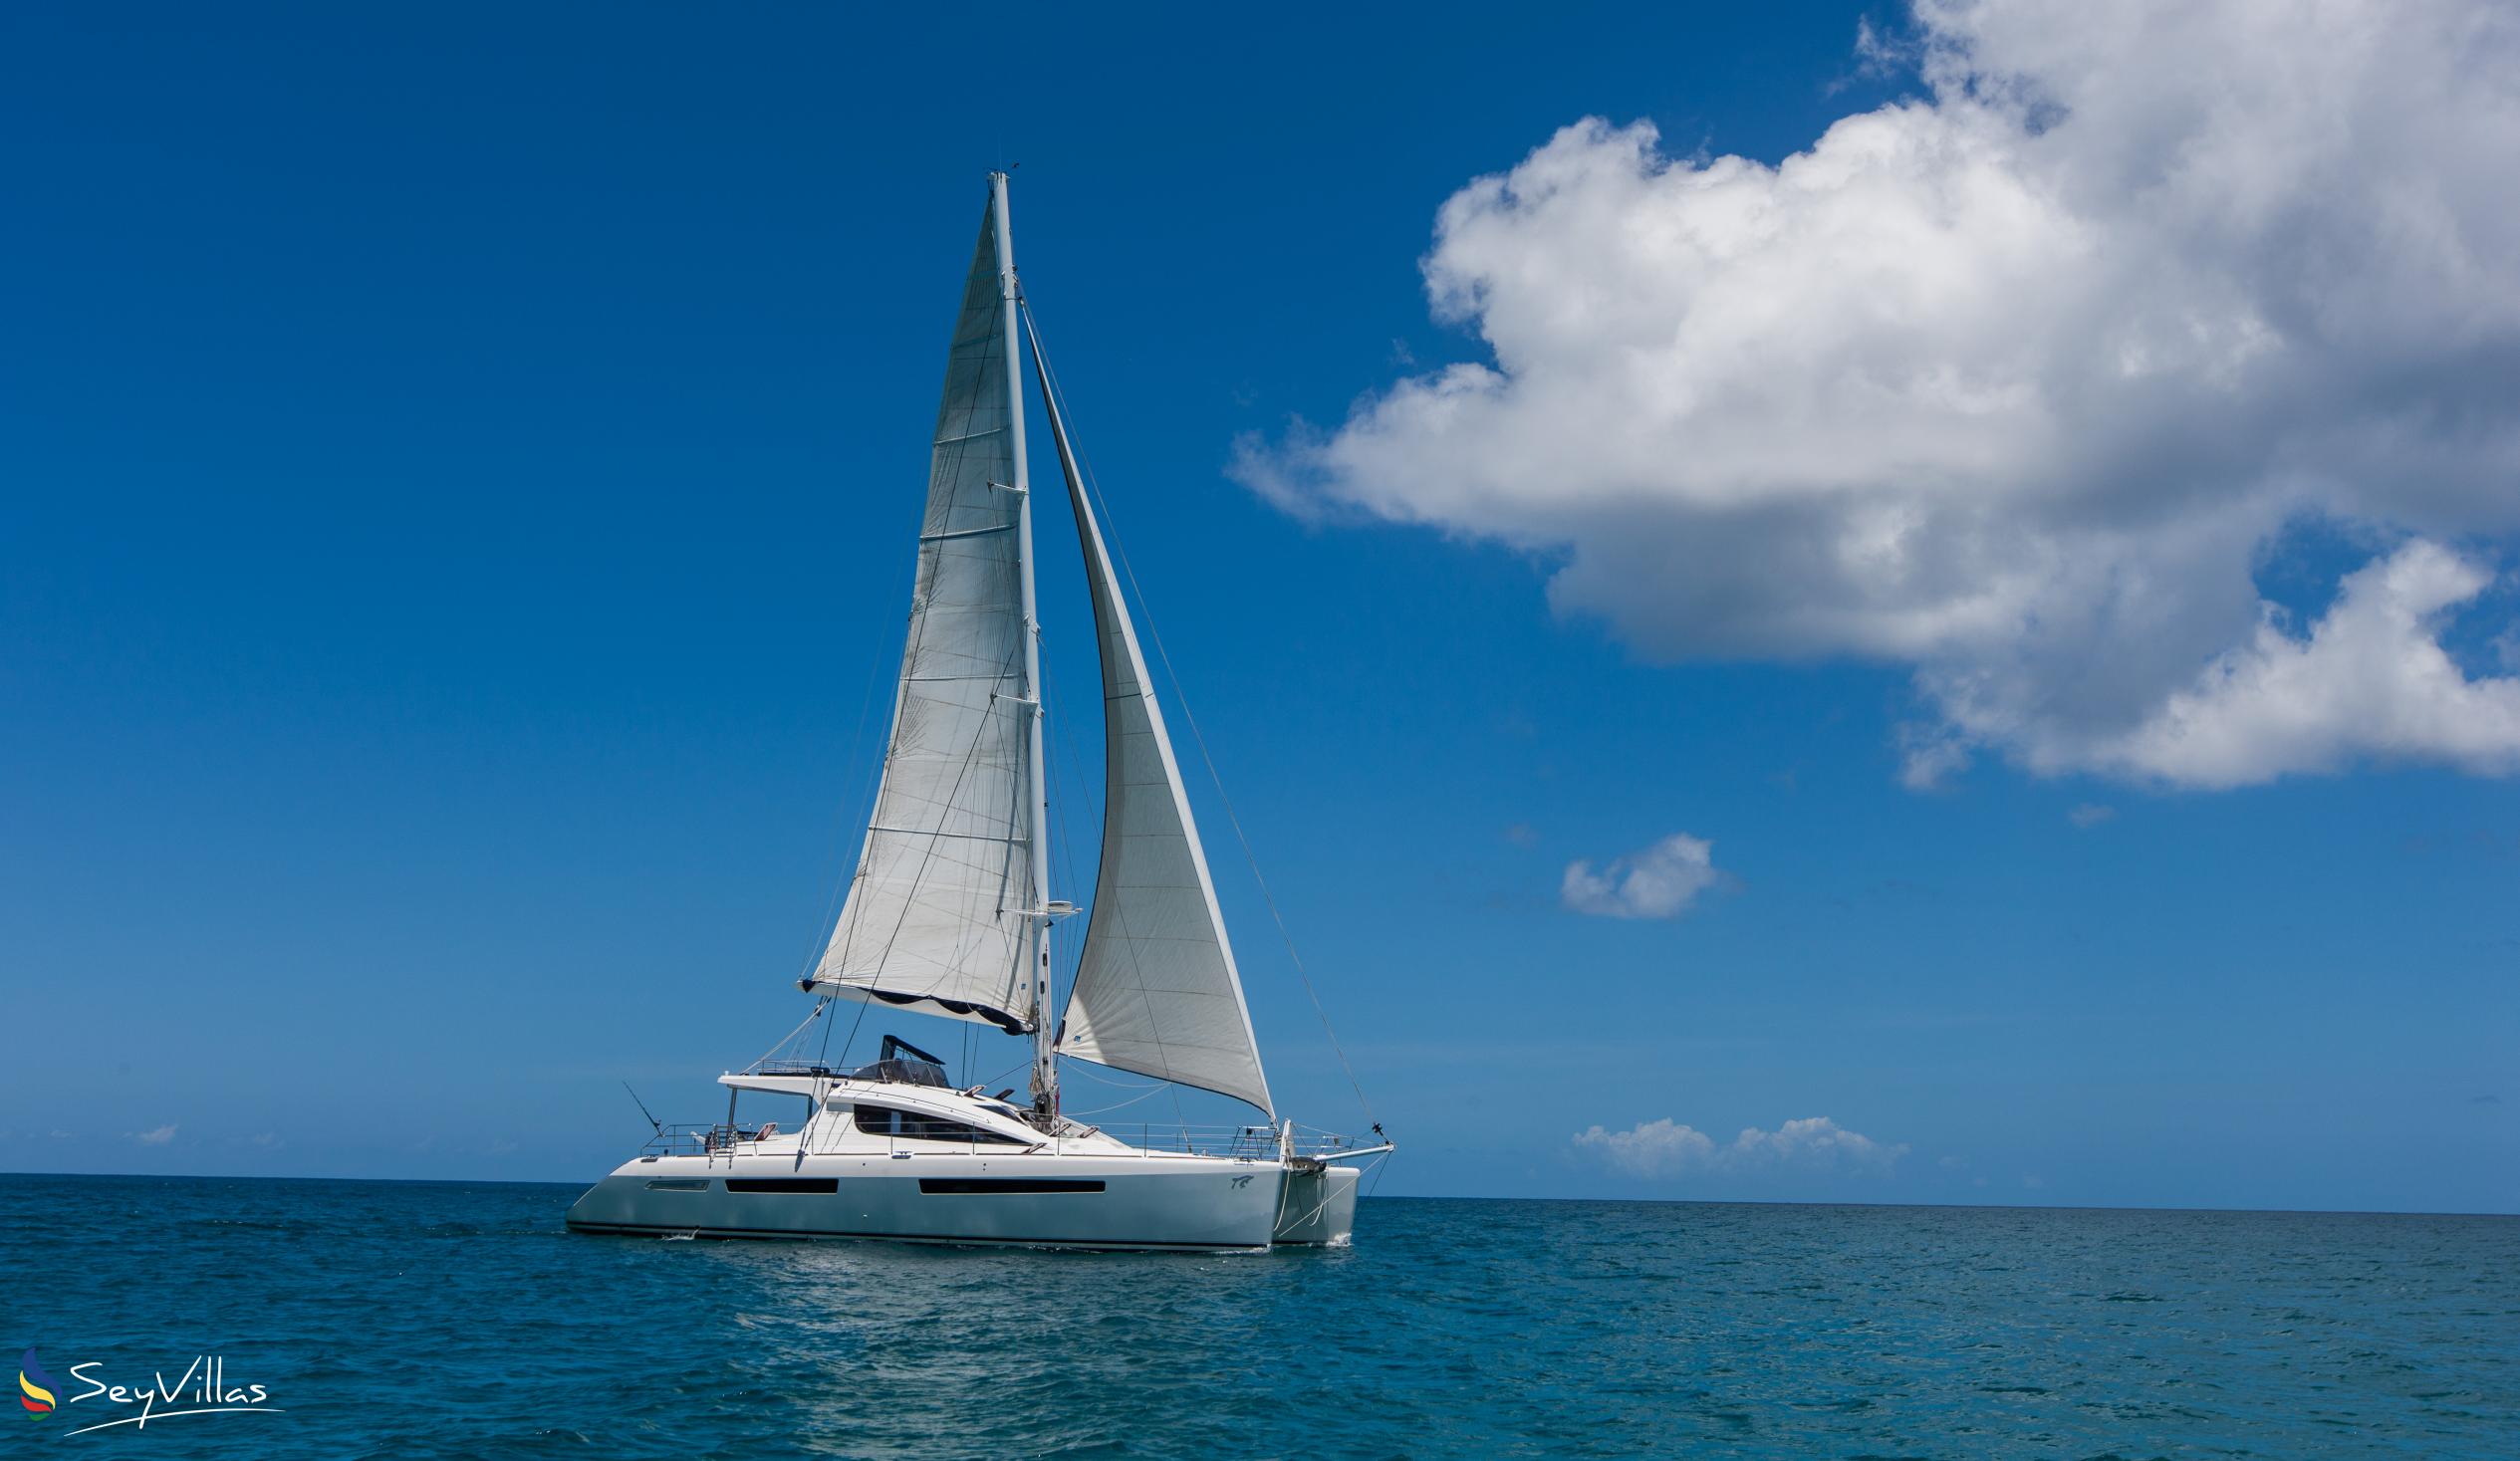 Photo 81: Seyscapes Yacht Charter - Full charter Cirrus - Seychelles (Seychelles)